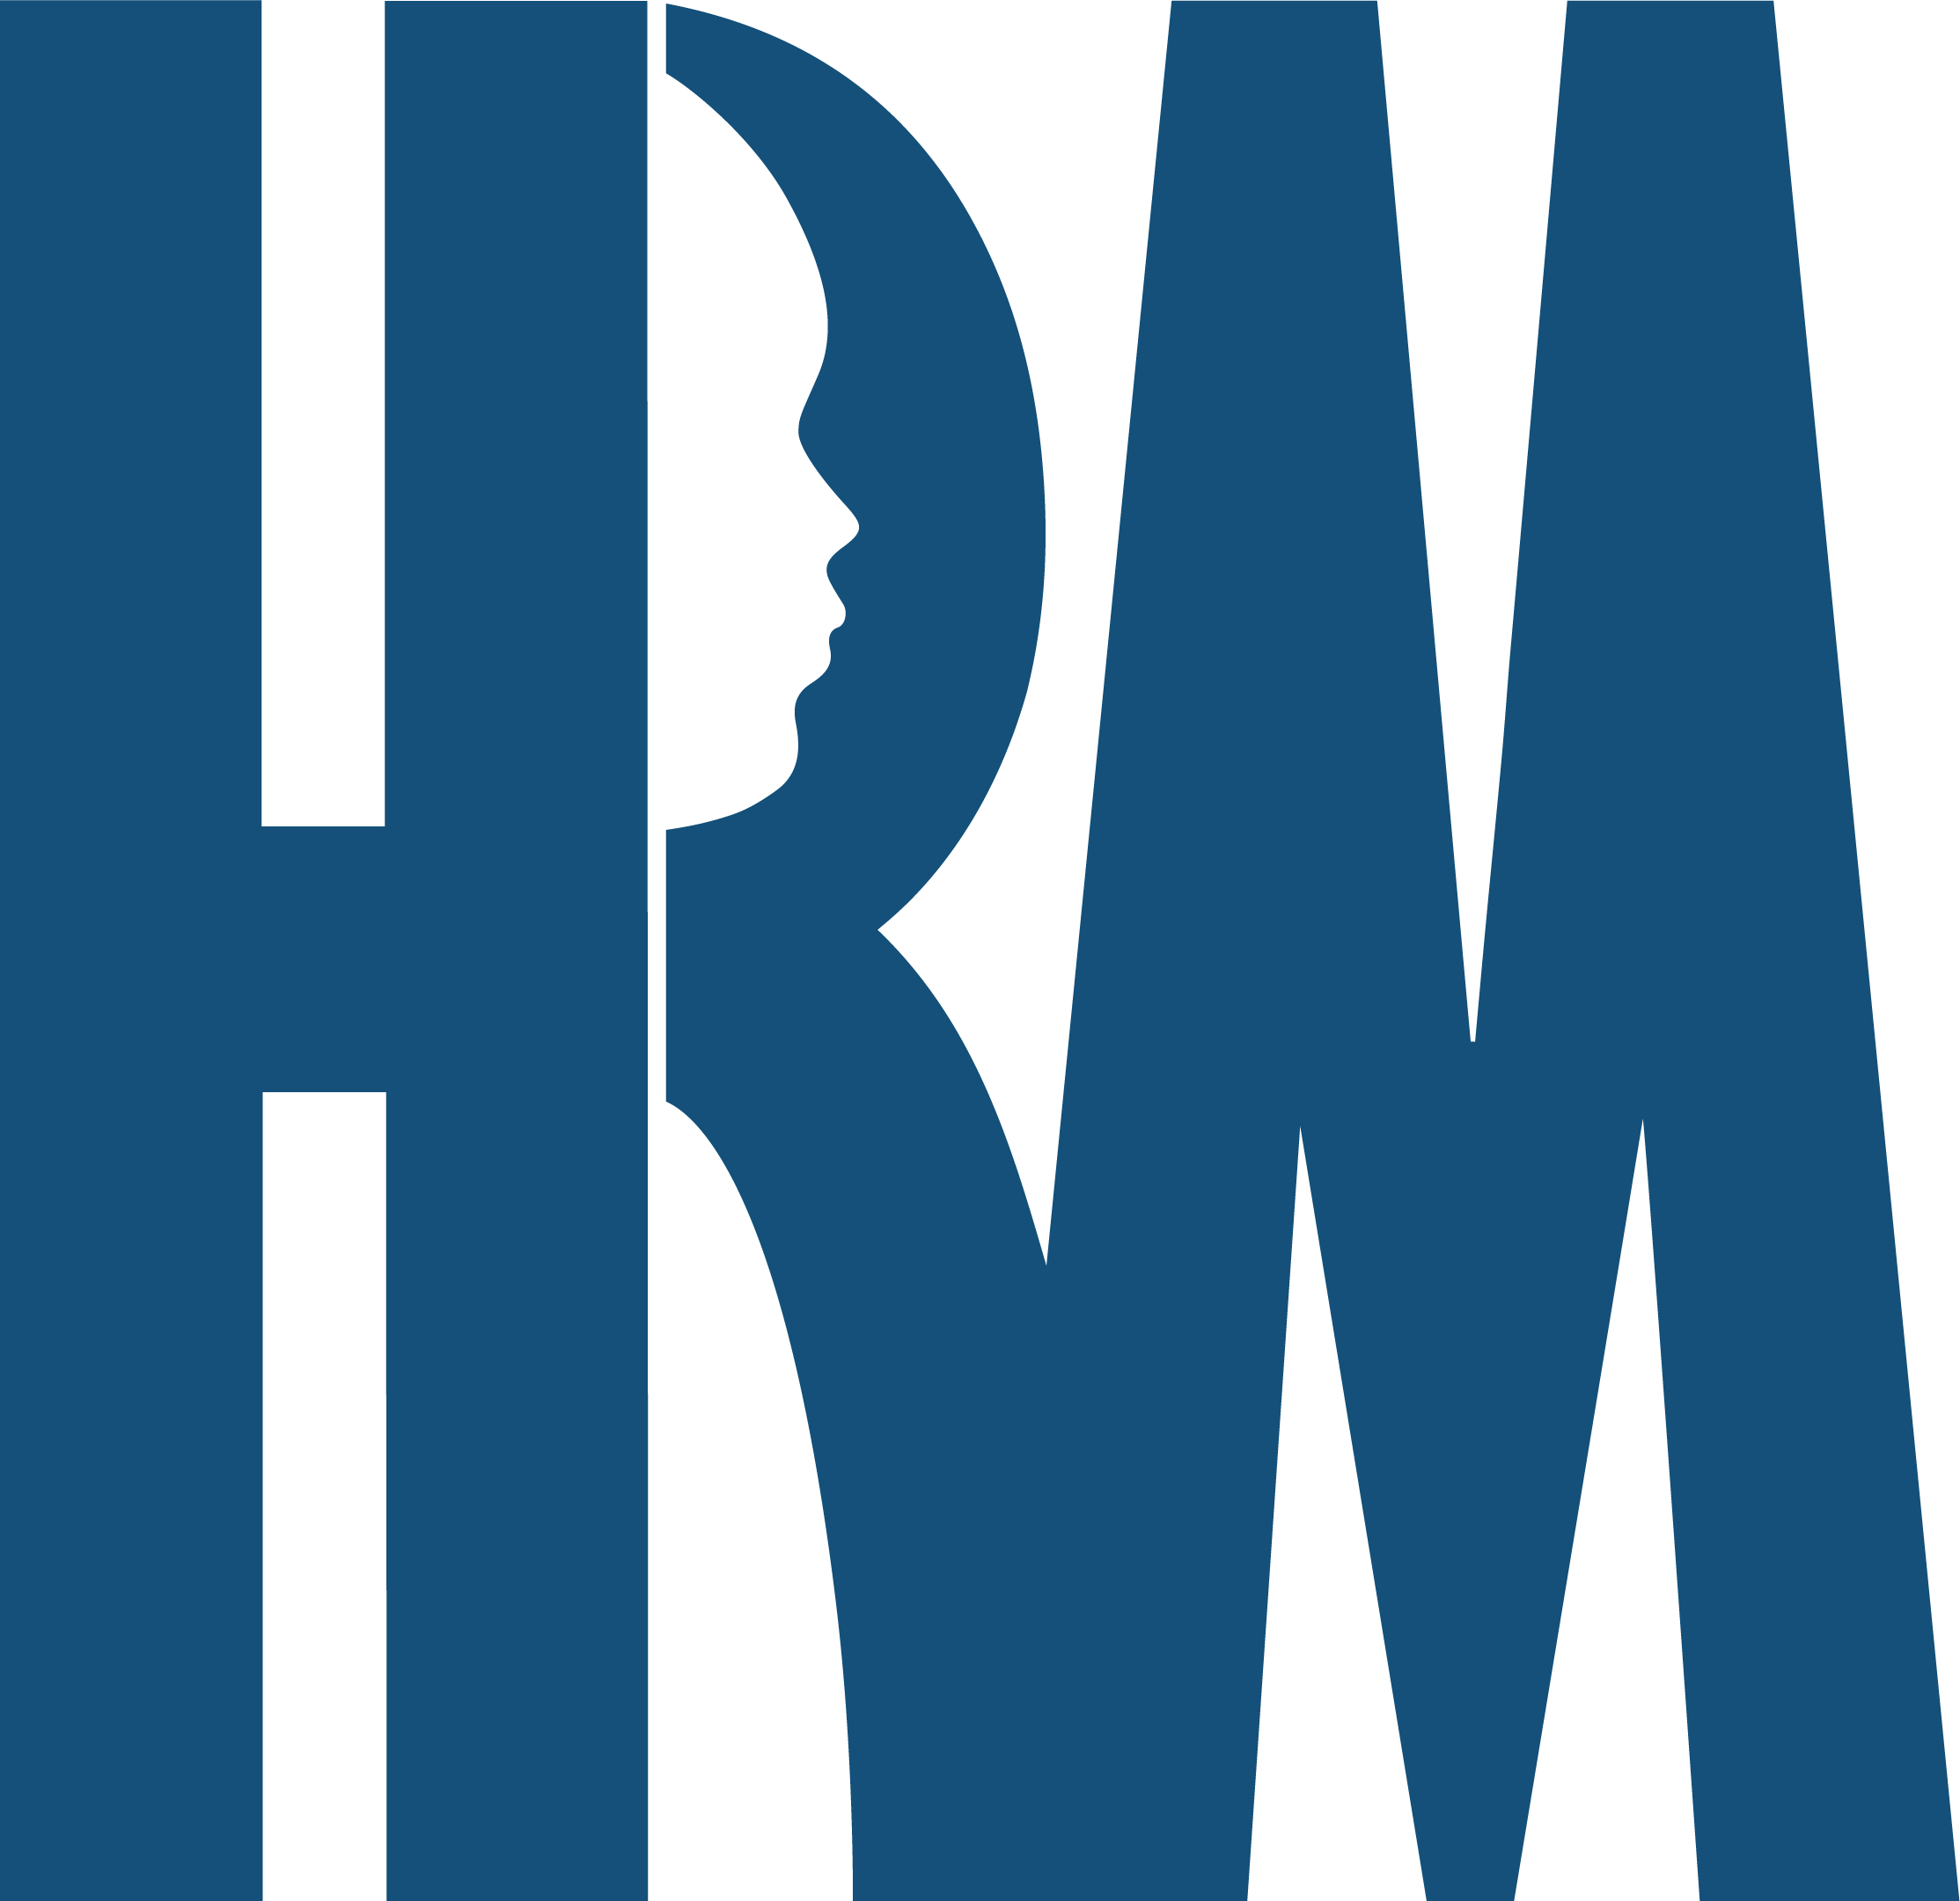 HRM Logo